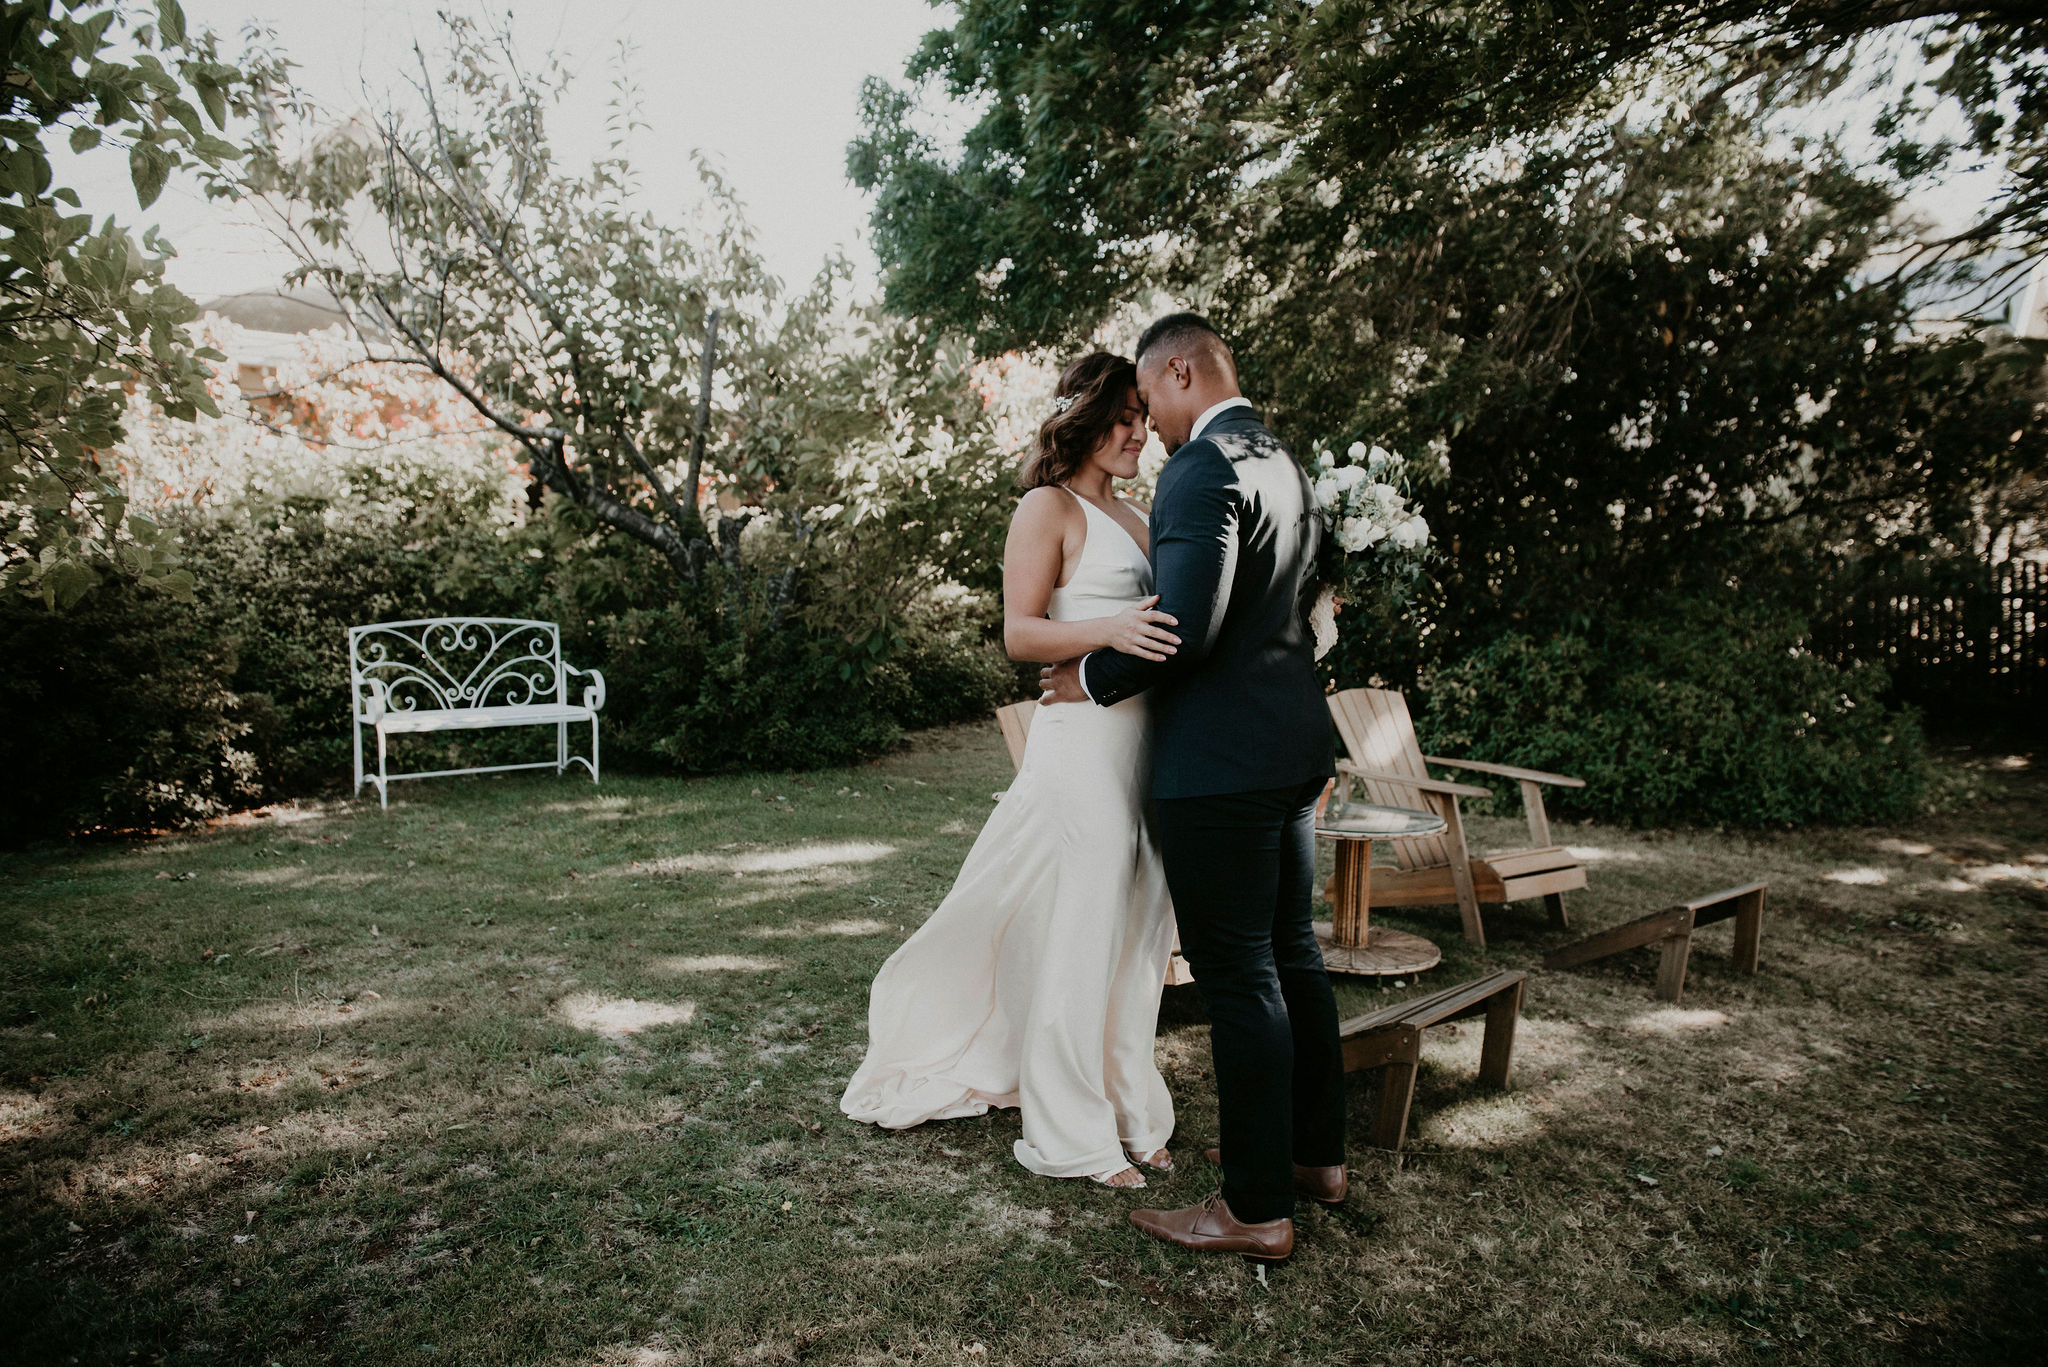 Lets-Elope-Melbourne-Celebrant-Photographer-Elopement-Package-Victoria-Sarah-Matler-Photography-Lavandula-Swiss-Italian-Farm-Daylesford-Macedon-Ranges-weddings-intimate-3